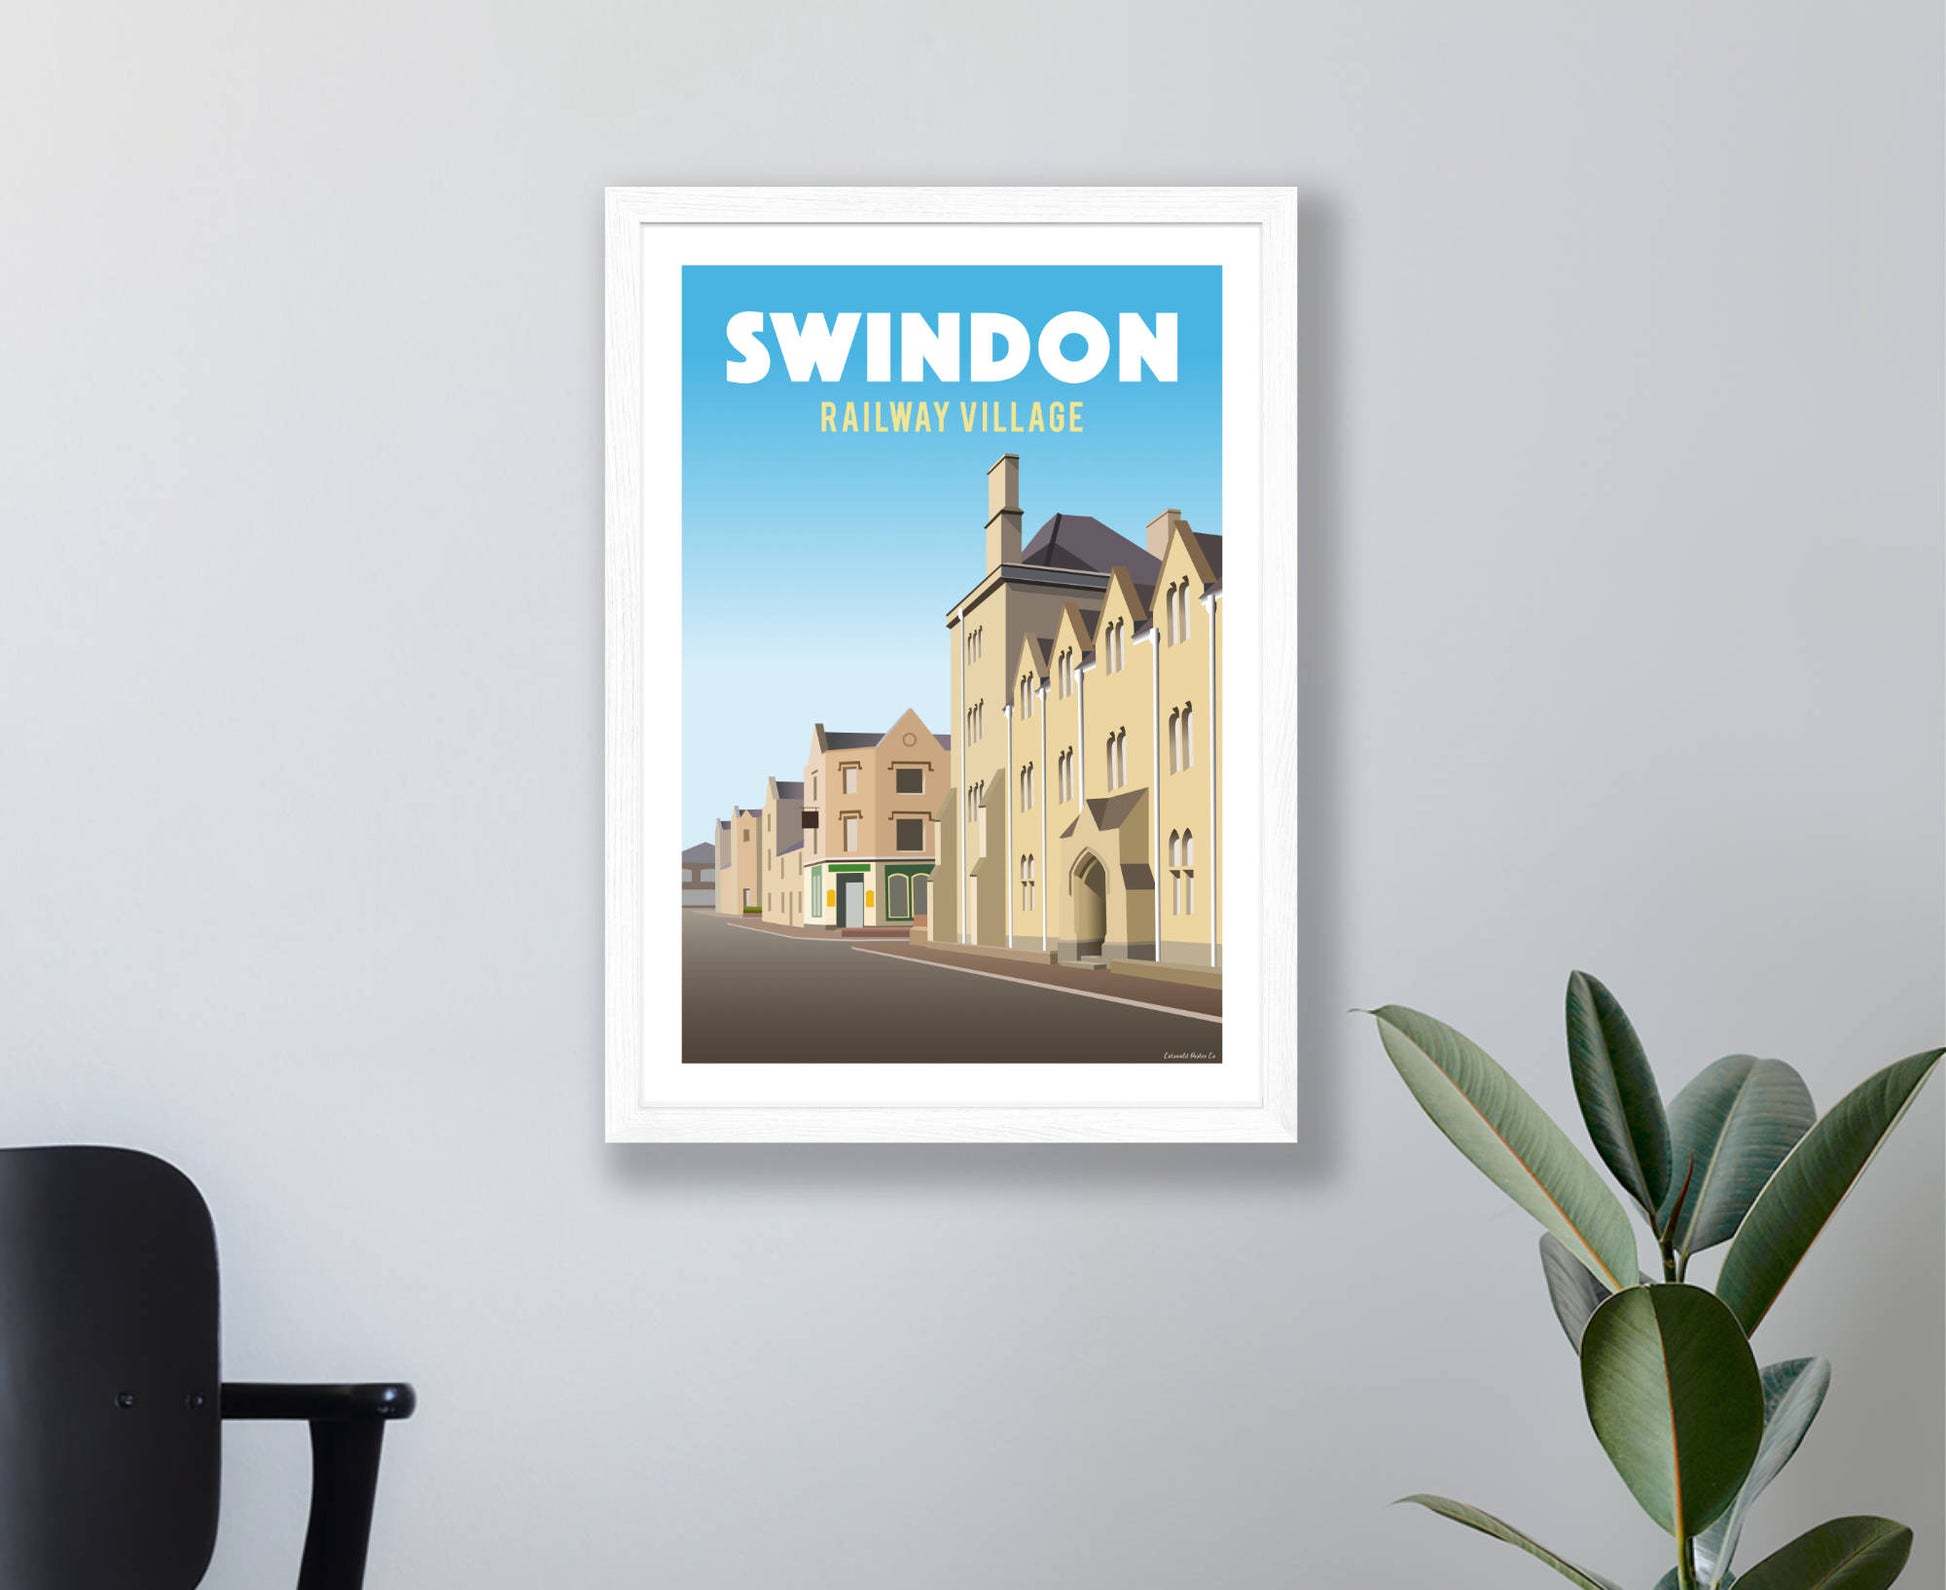 Swindon Railway Village Poster in white frame